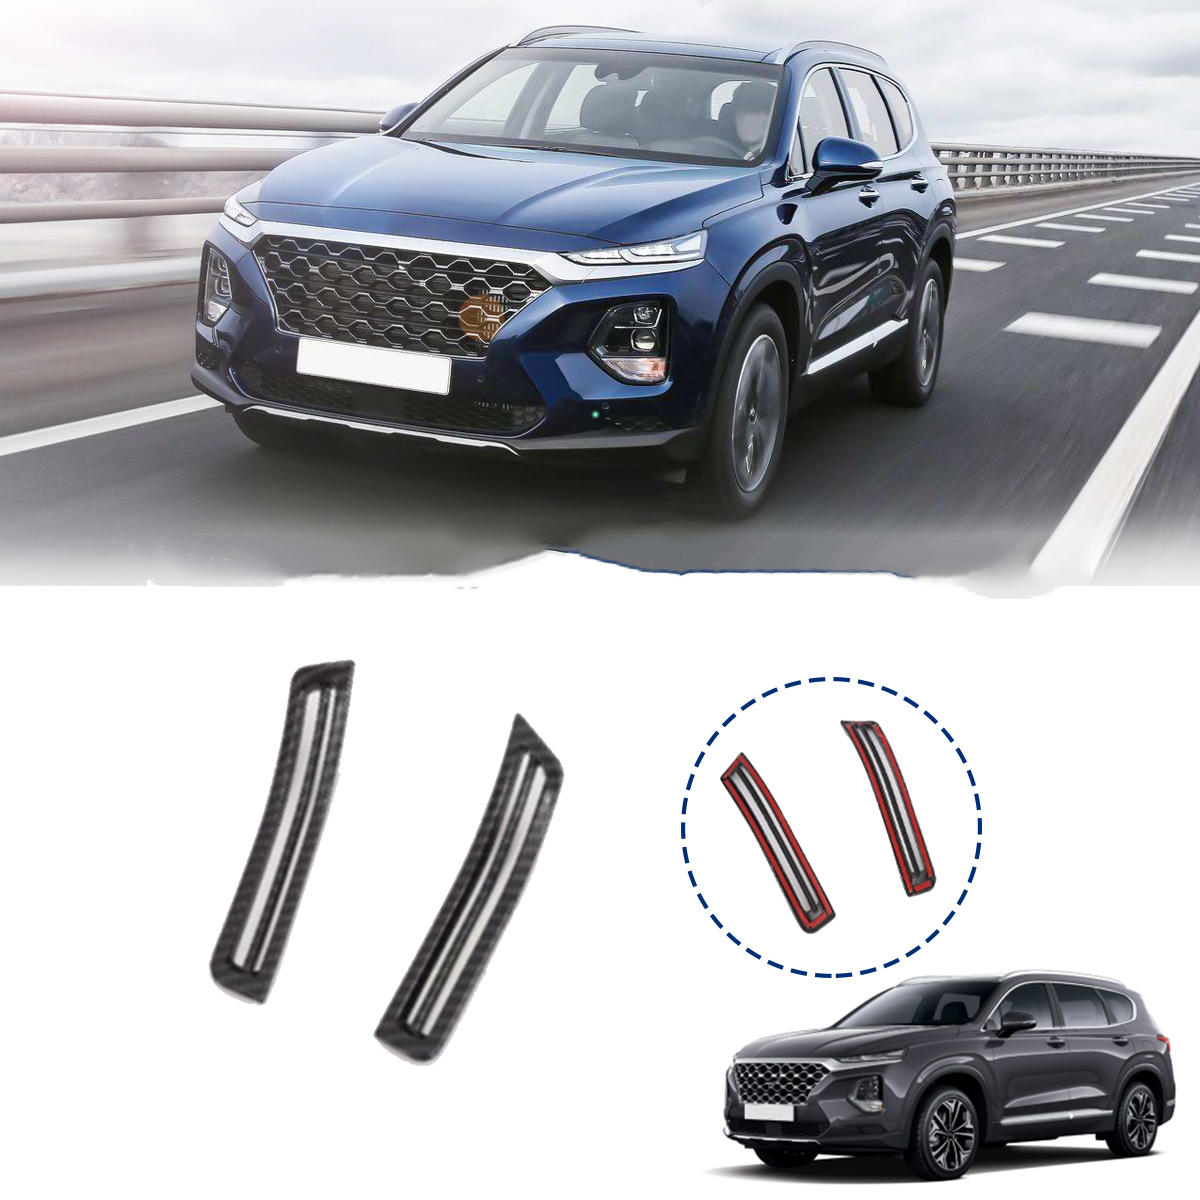 Carbon Fiber Car Interior A Pillar Air Conditioning Vent Trim Cover Sticker Accessories Styling For Hyundai Santa Fe 2019 2020